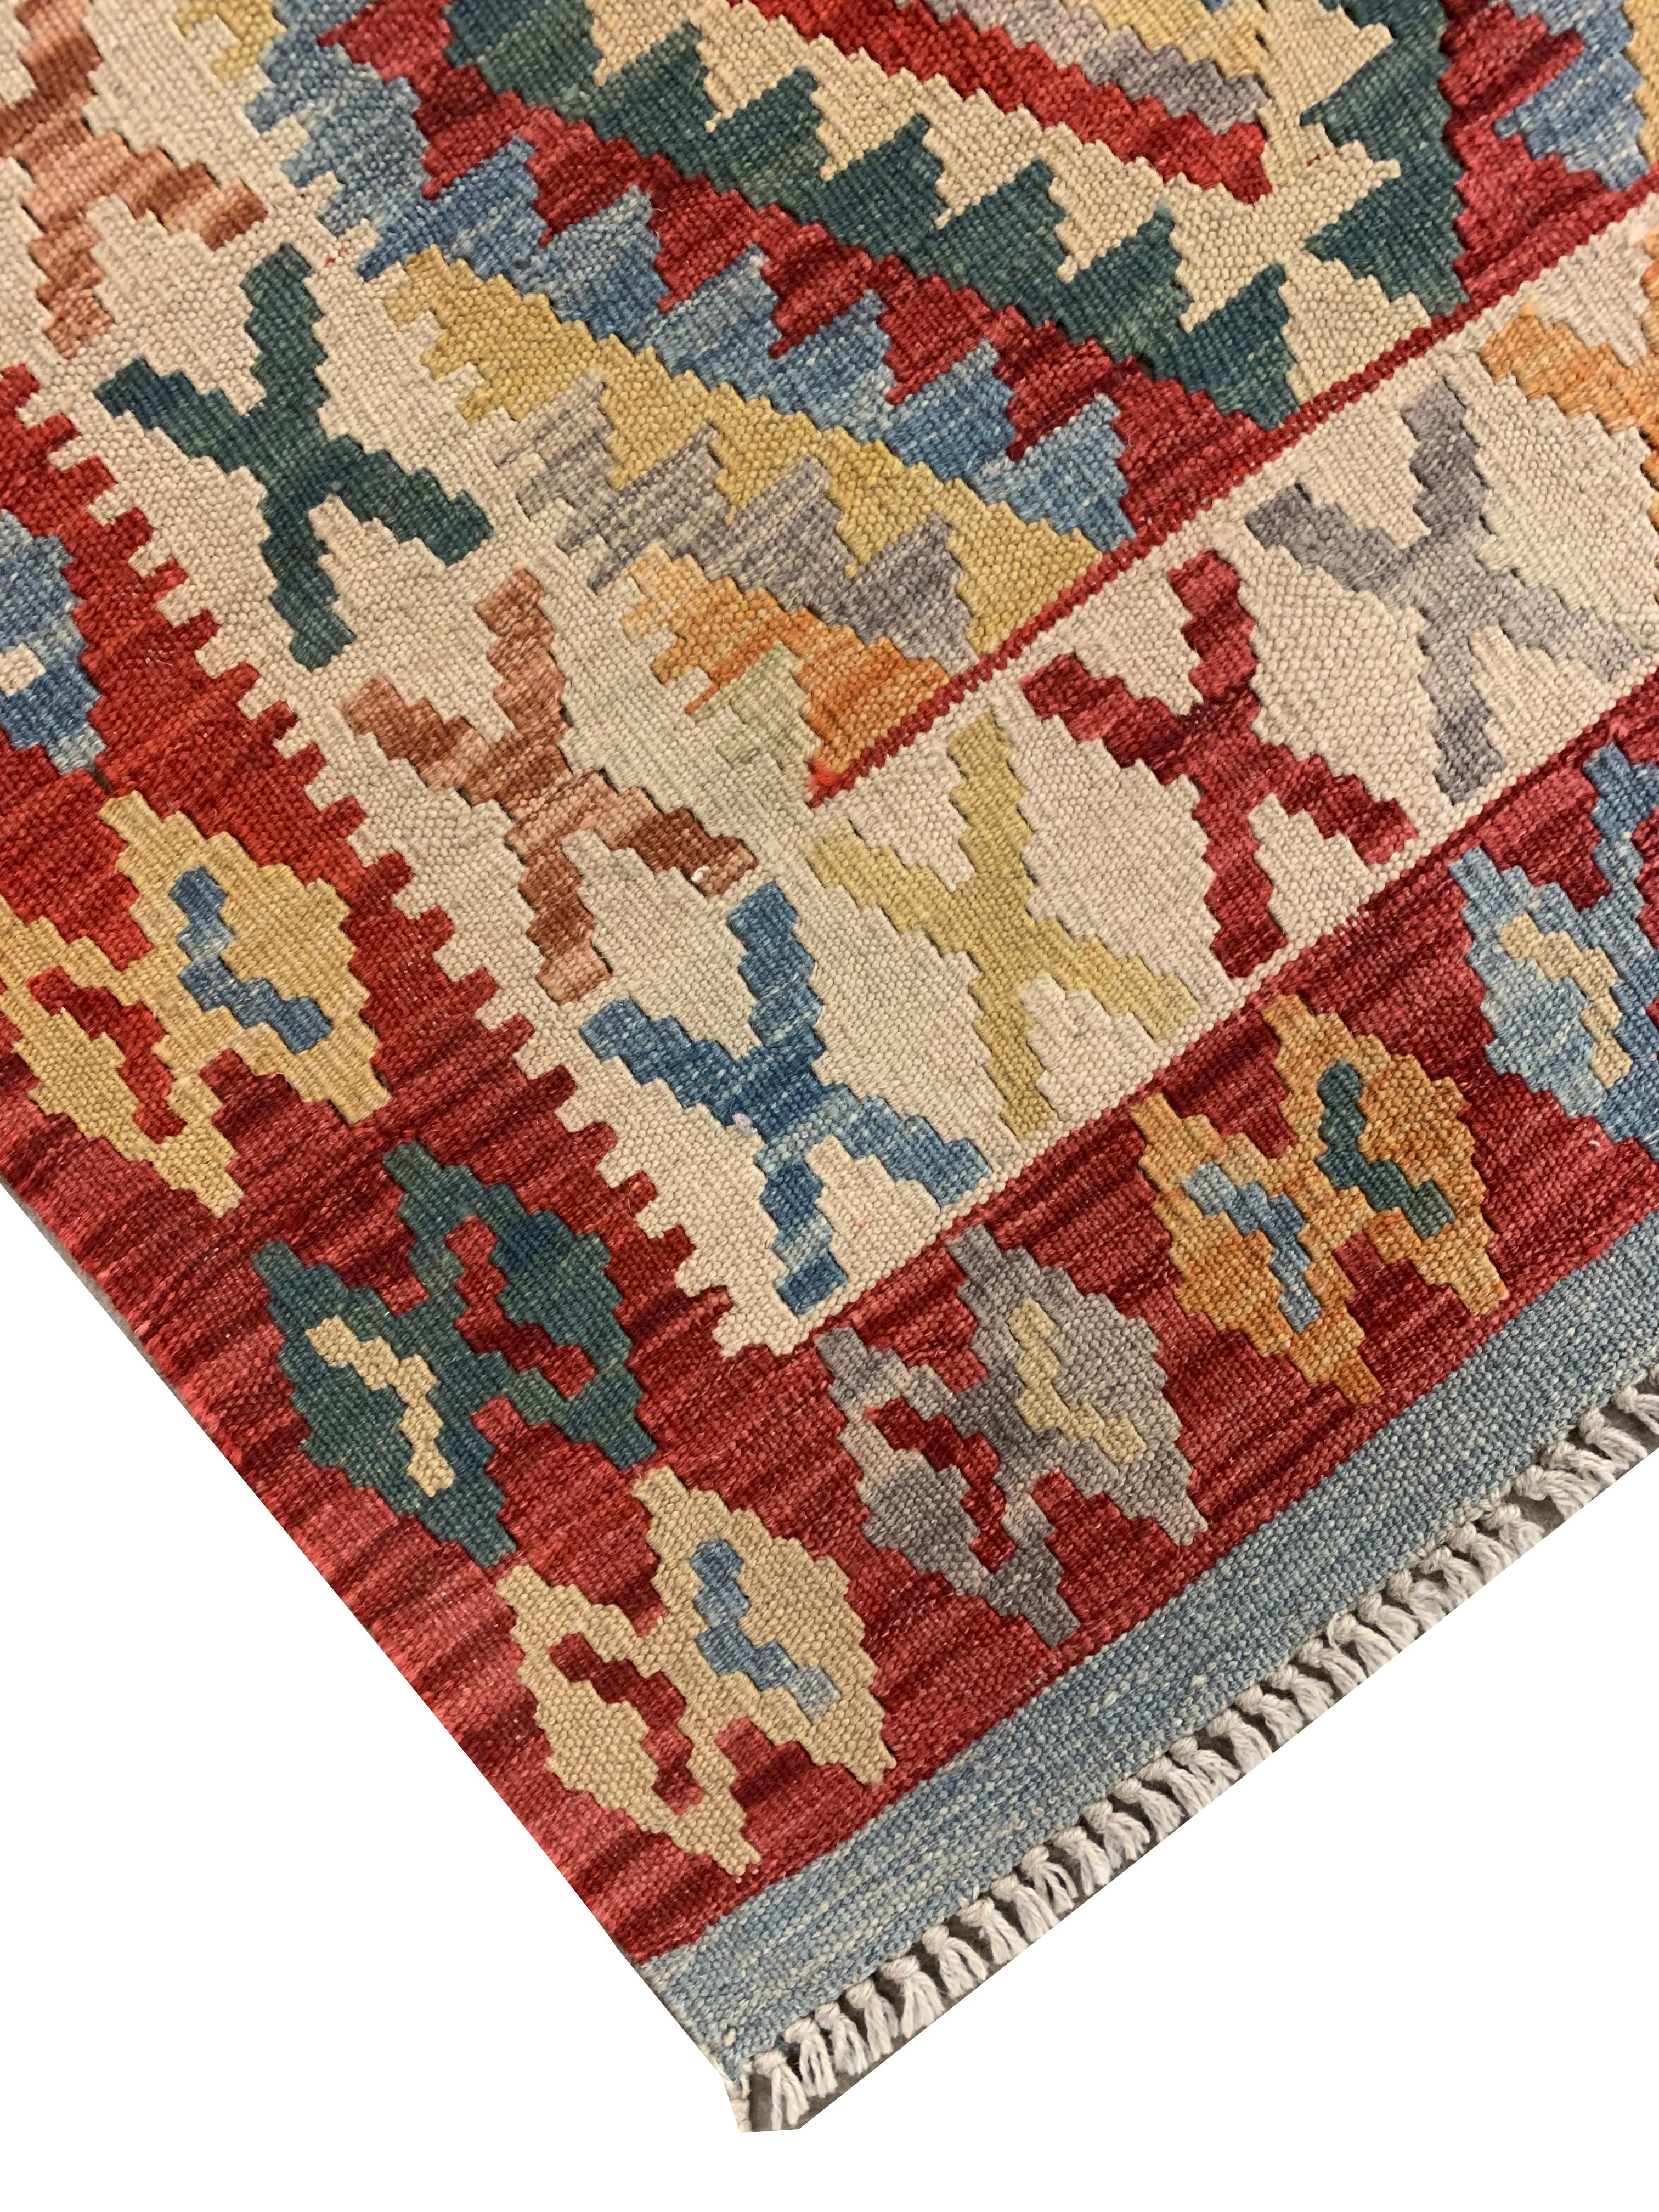 Contemporary Traditional Geometric Kilim Rug, Beige Red Wool Kilim Area Rug